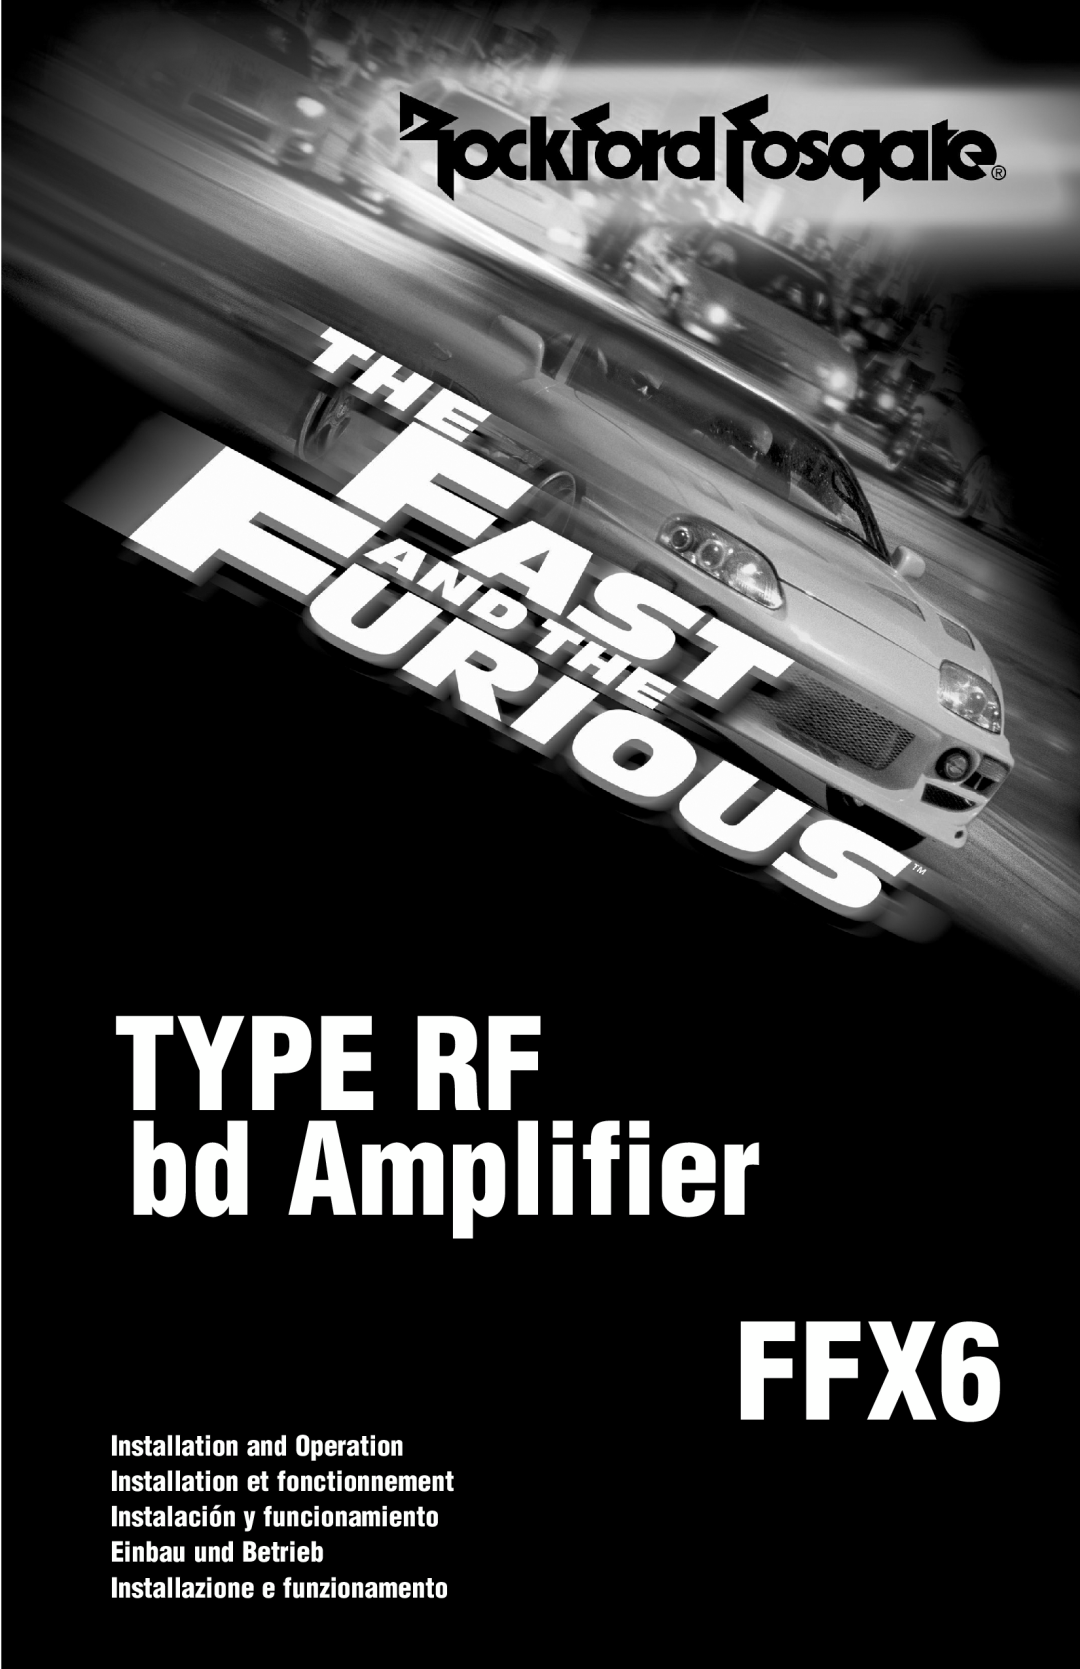 Rockford Fosgate FFX6 manual TYPE RF bd Amplifier, Installation and Operation, Installation et fonctionnement 